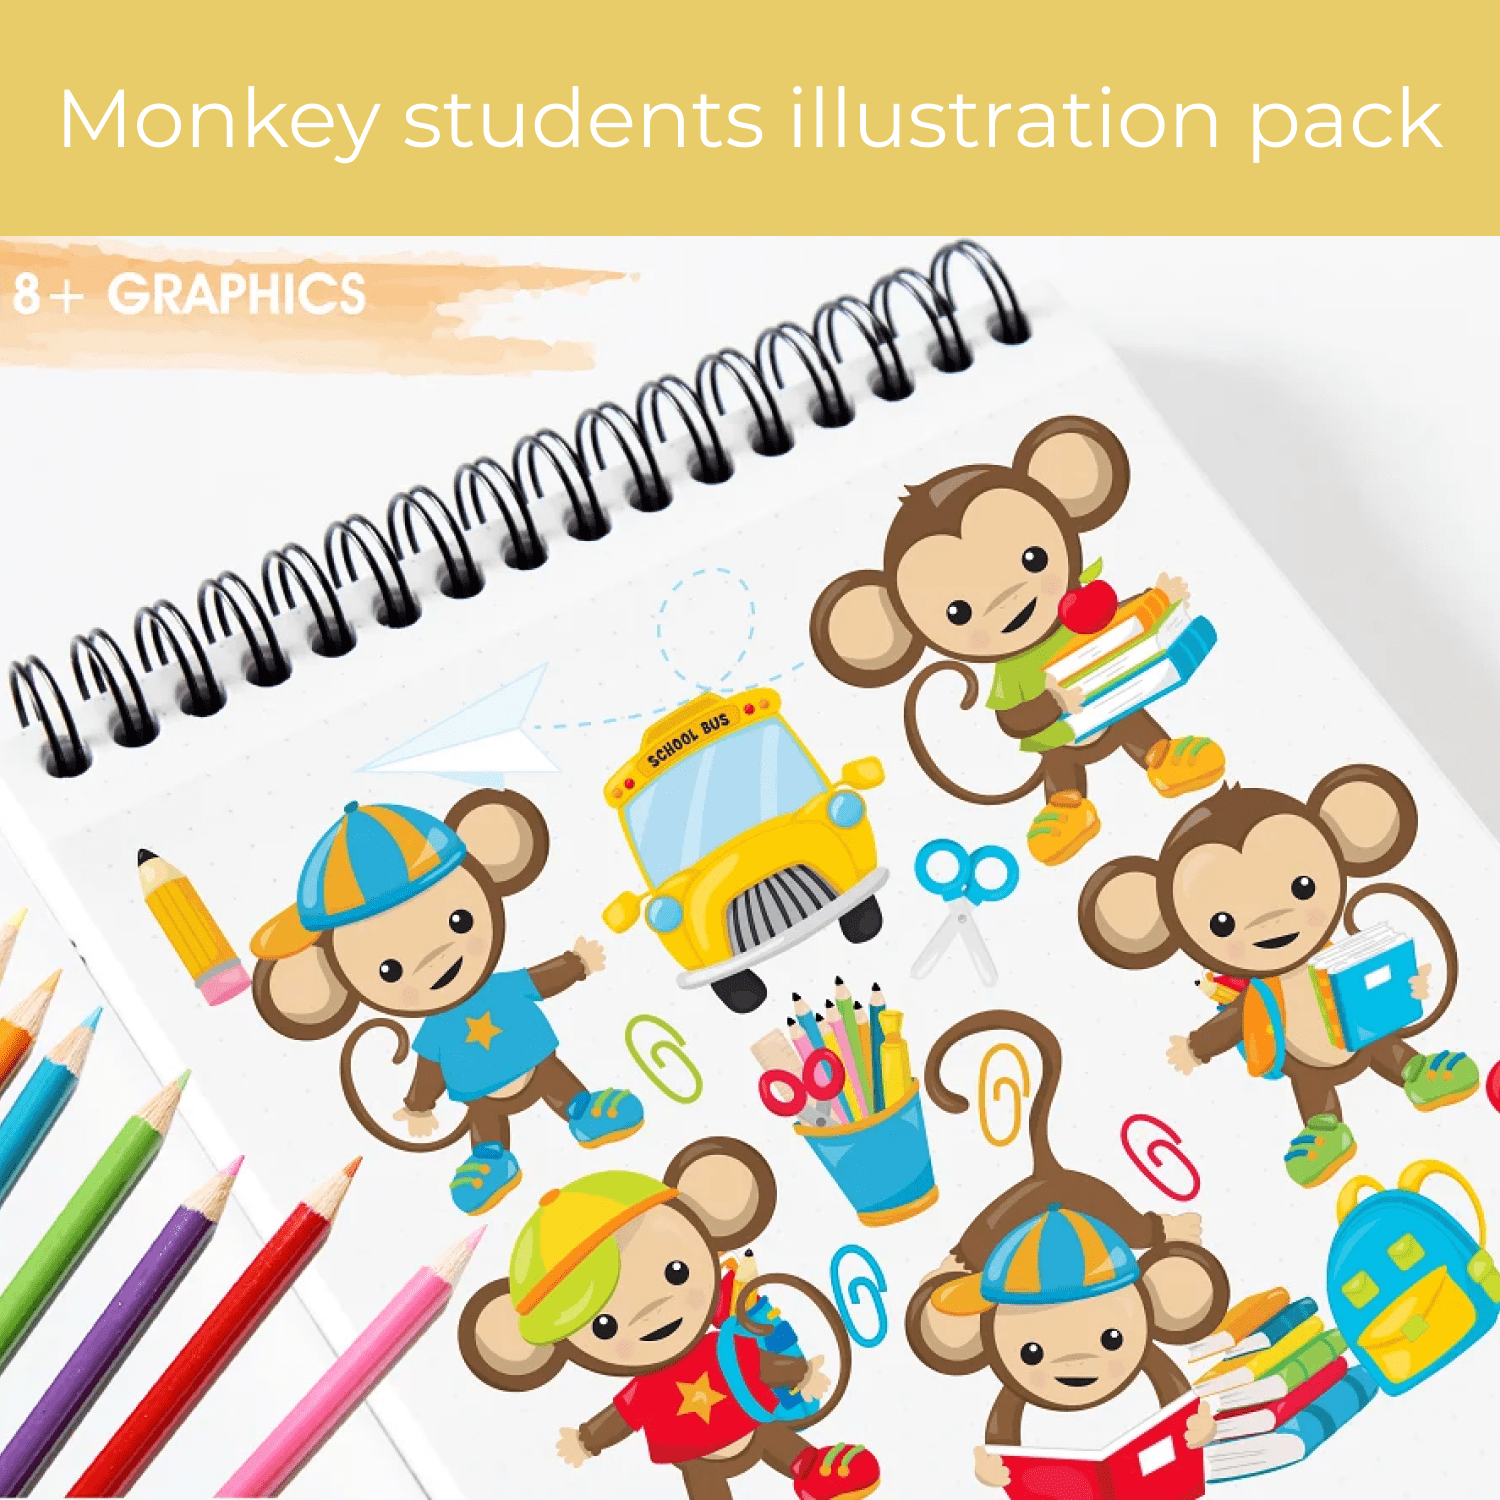 Monkey students illustration pack.